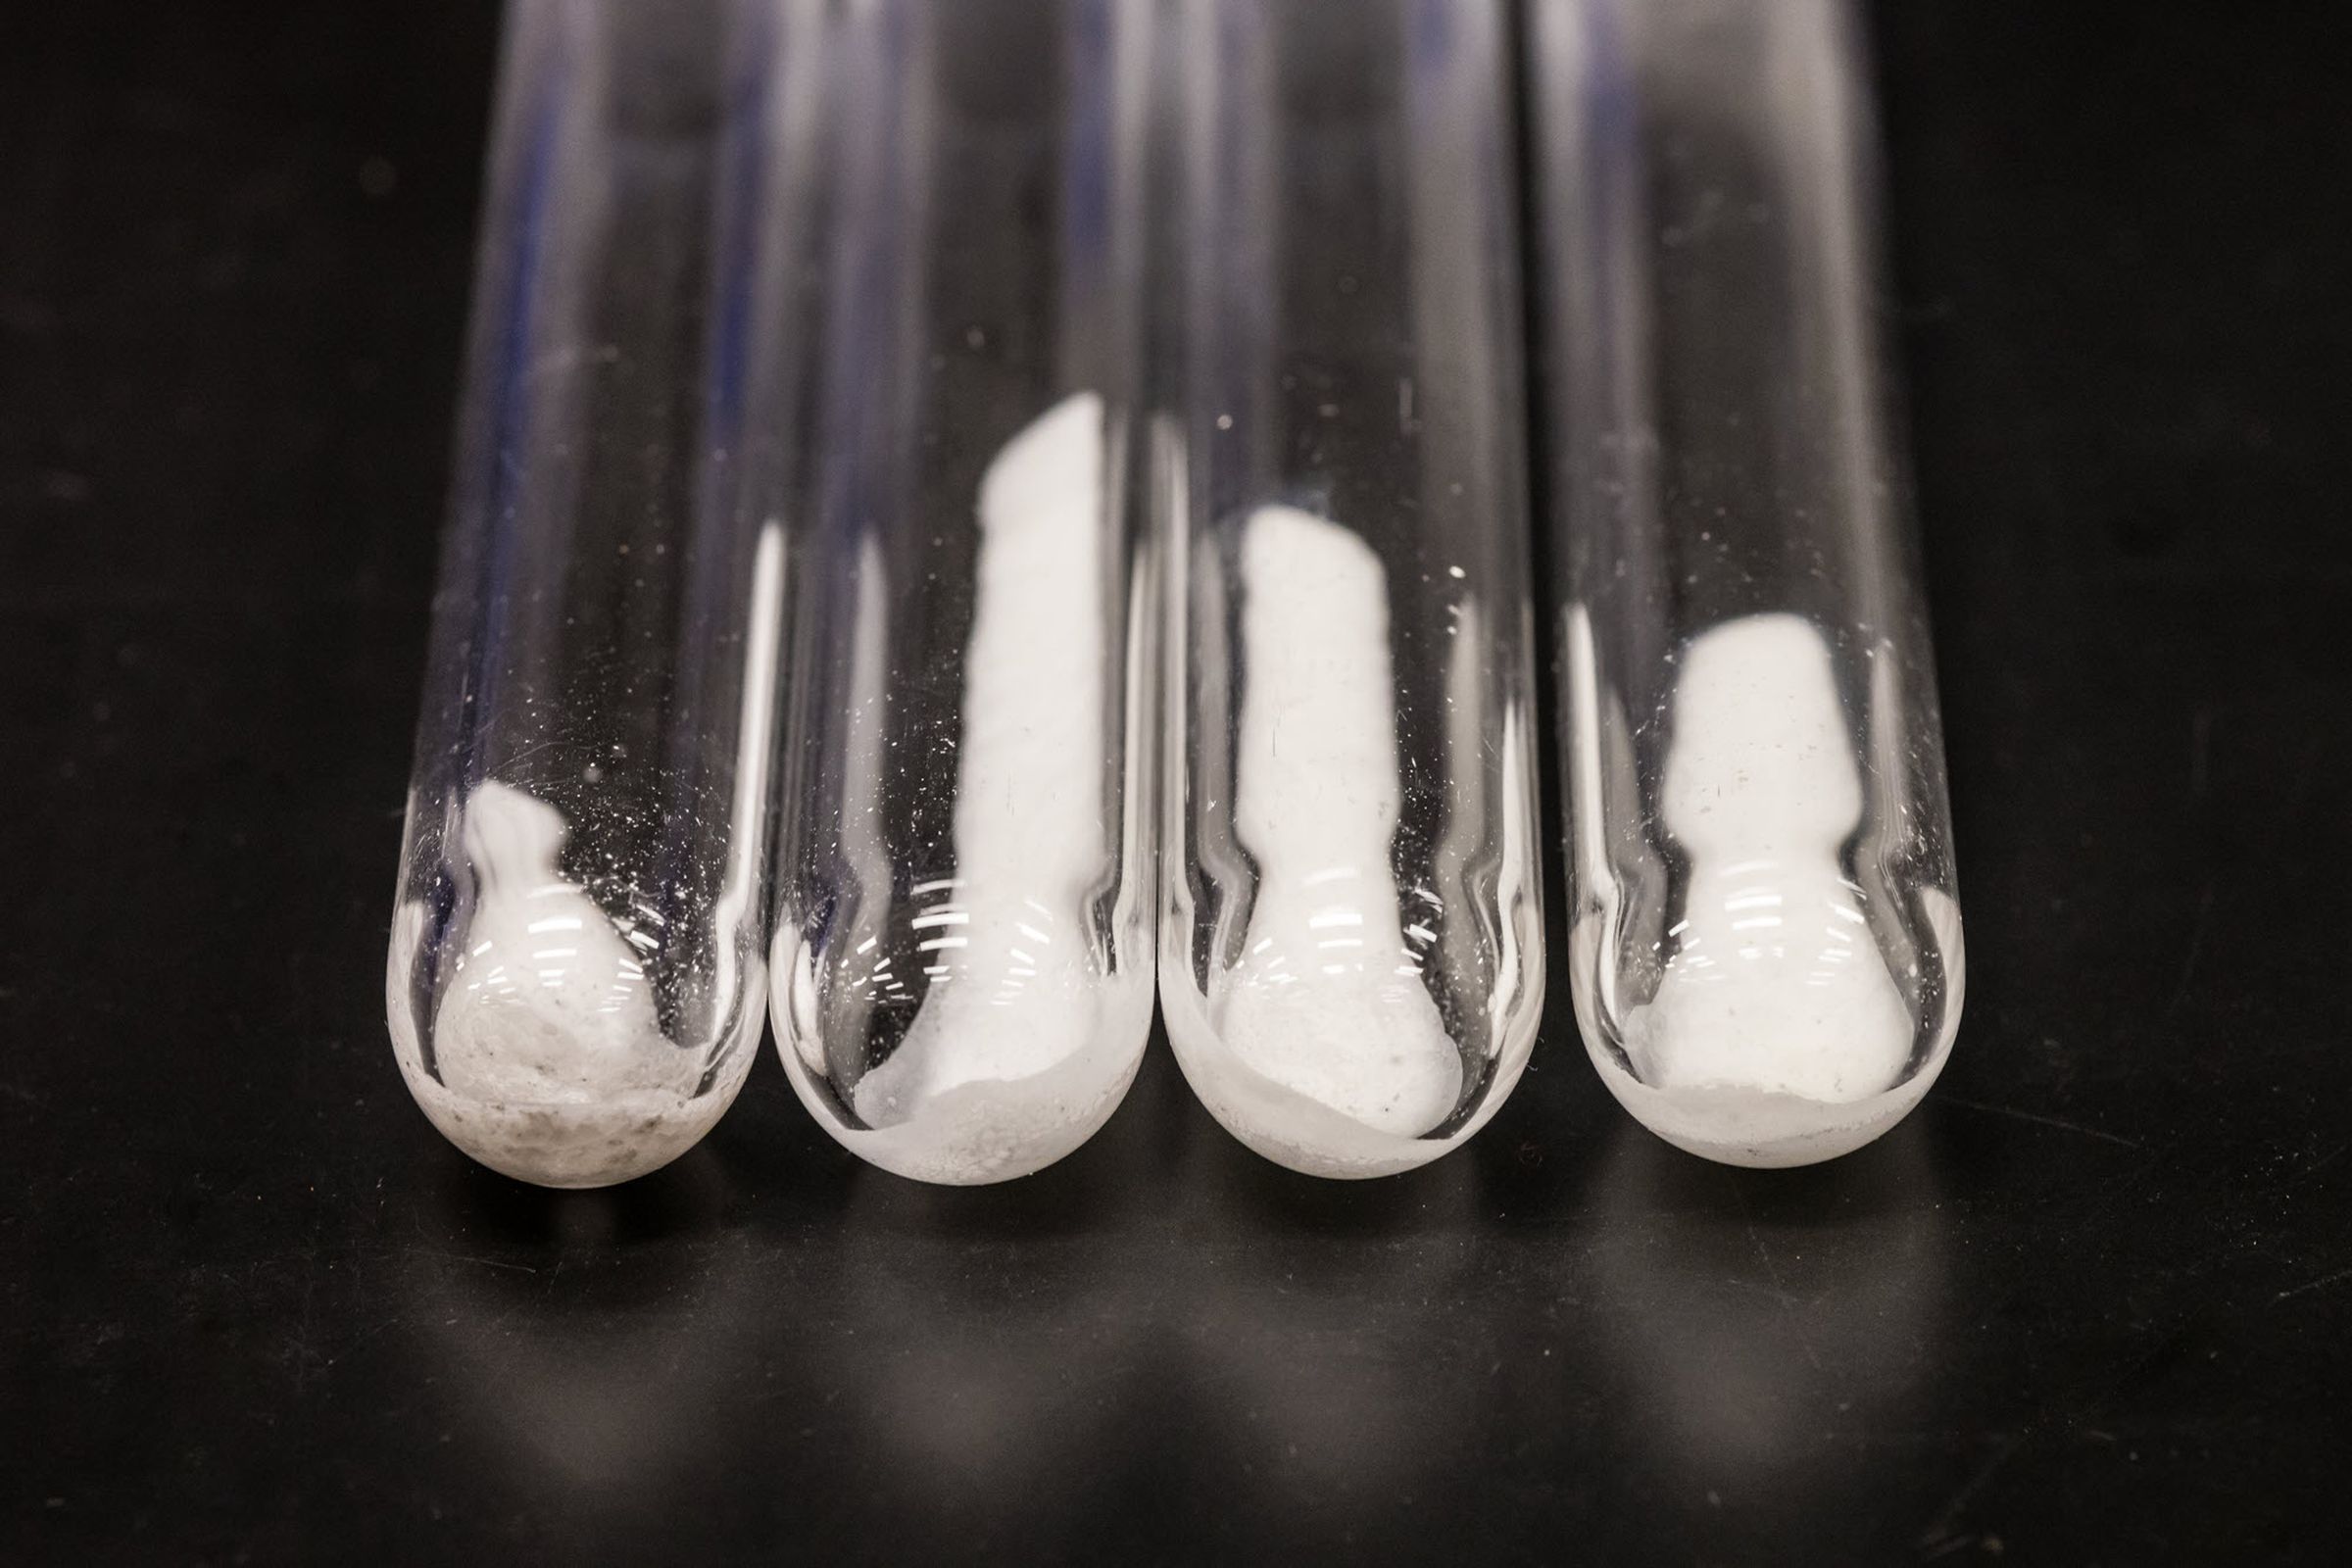 White powder inside four clear glass test tubes.